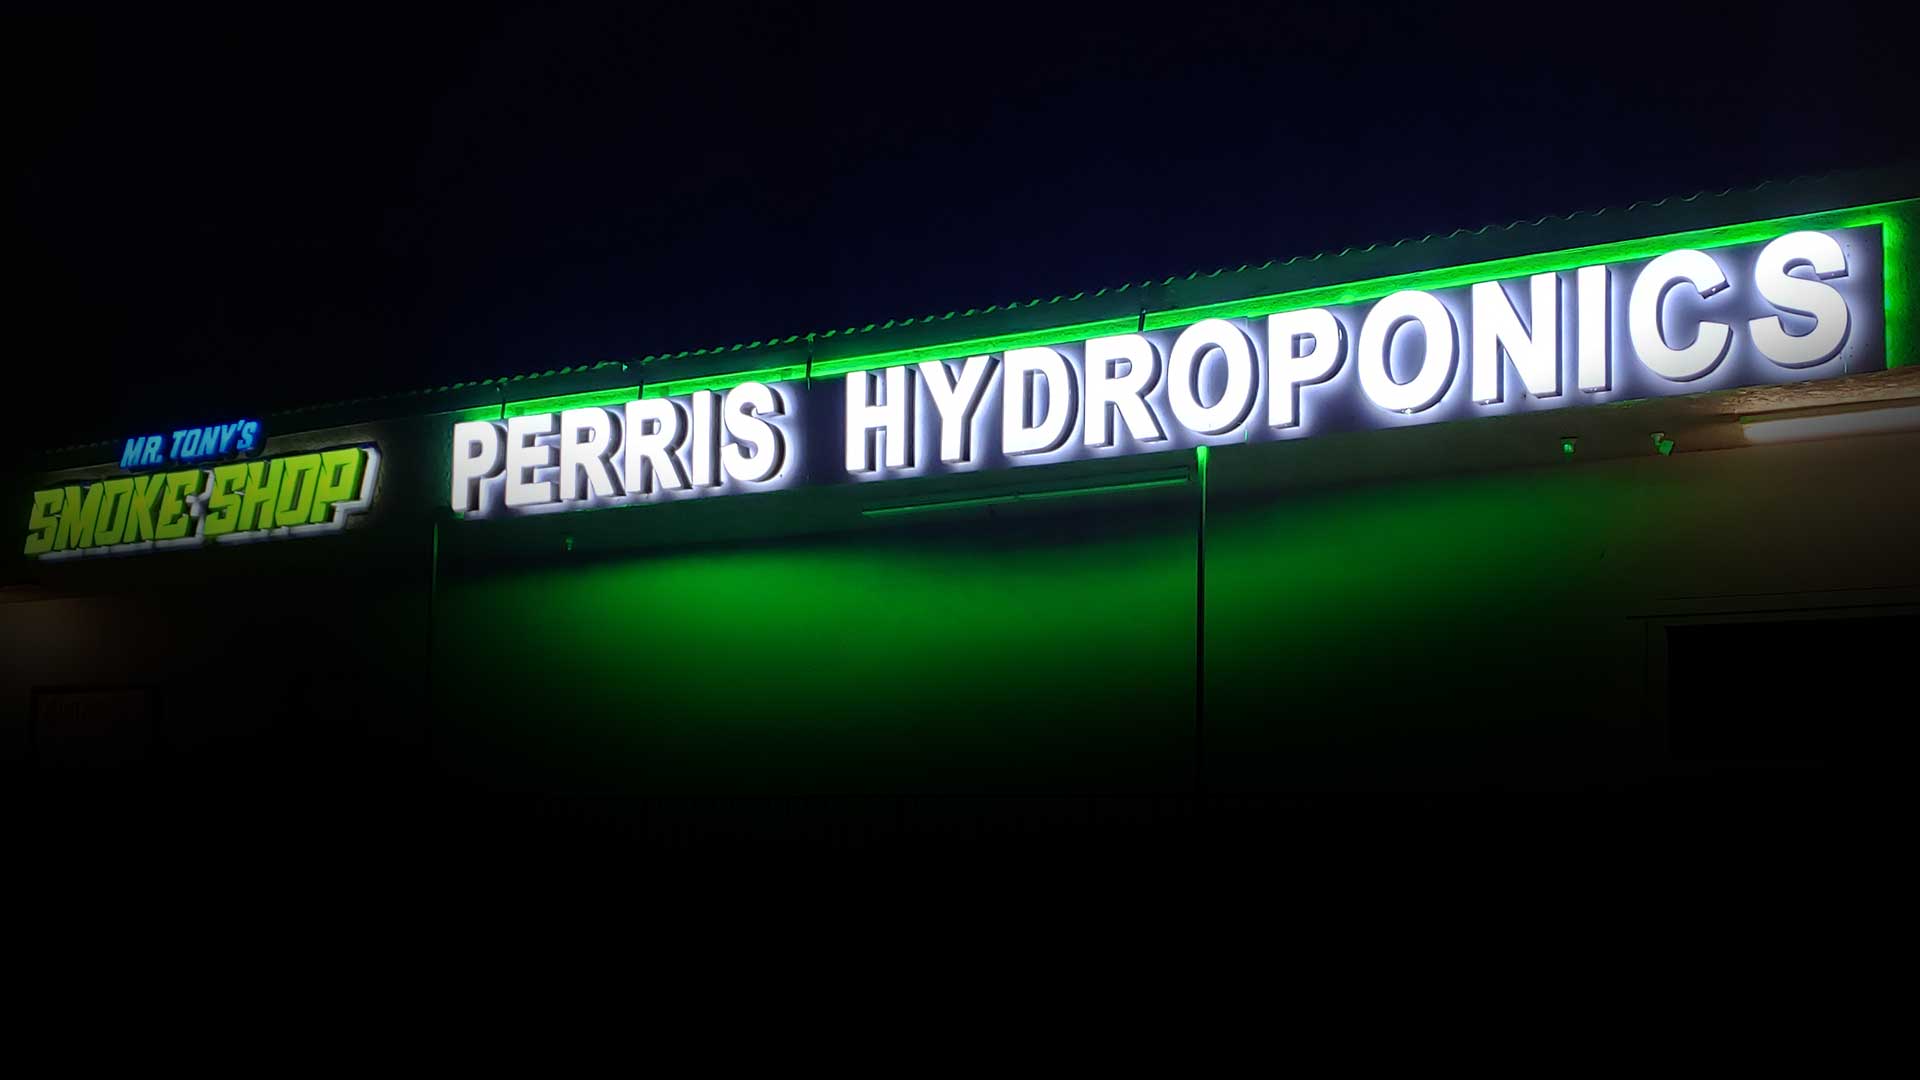 Perris Hydroponics - Best Lawn & Garden Supply Store In Riverside County